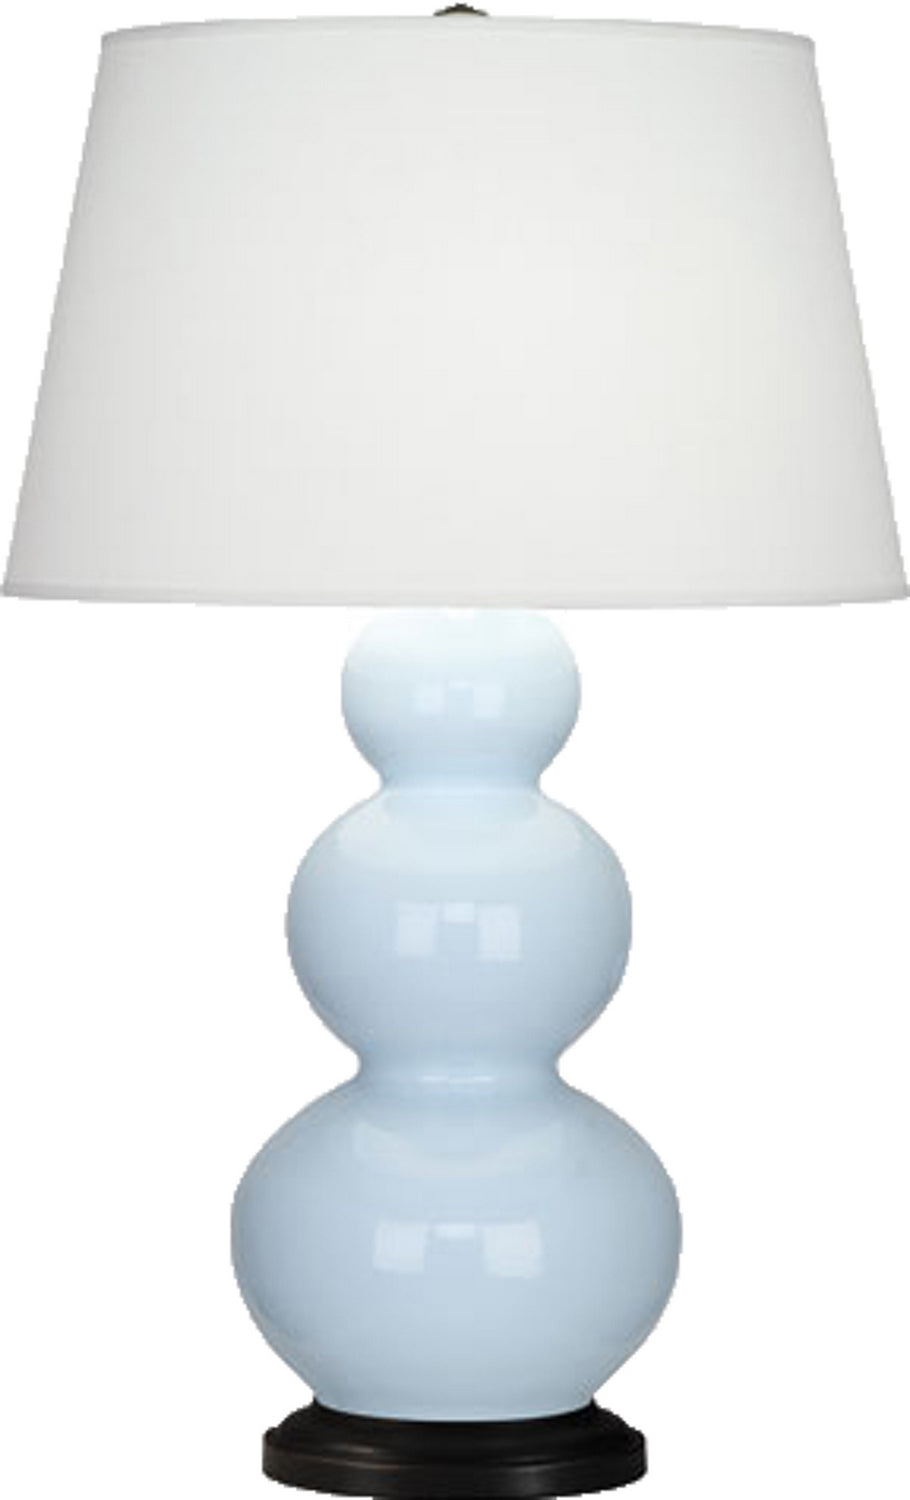 Robert Abbey - One Light Table Lamp - Triple Gourd - Baby Blue Glazed Ceramic w/Deep Patina Bronze- Union Lighting Luminaires Decor